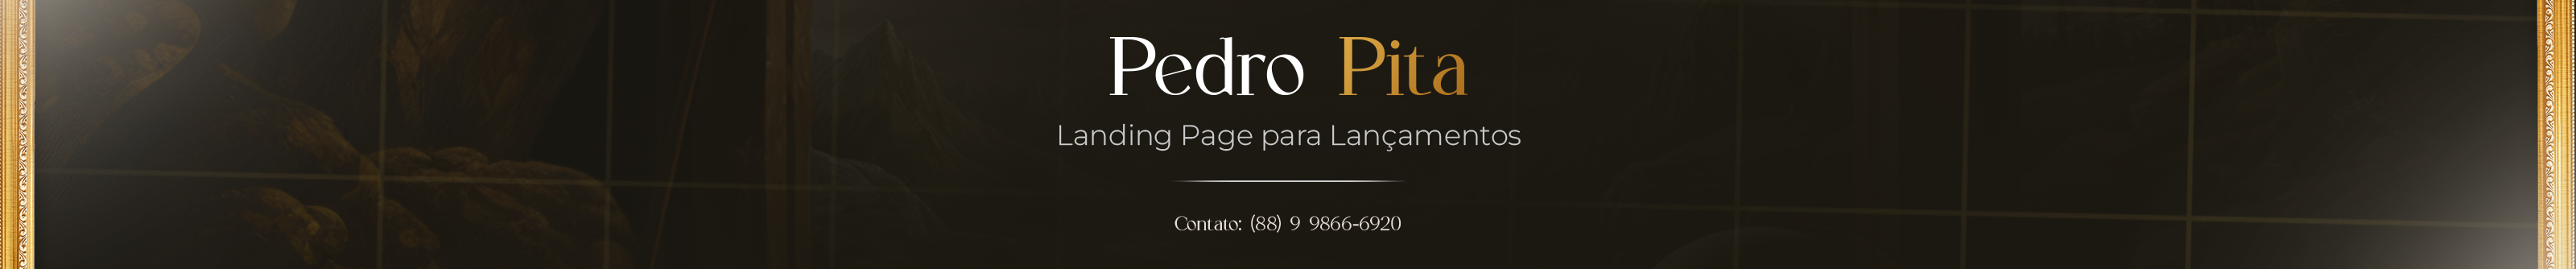 Pedro Pitas profilbanner